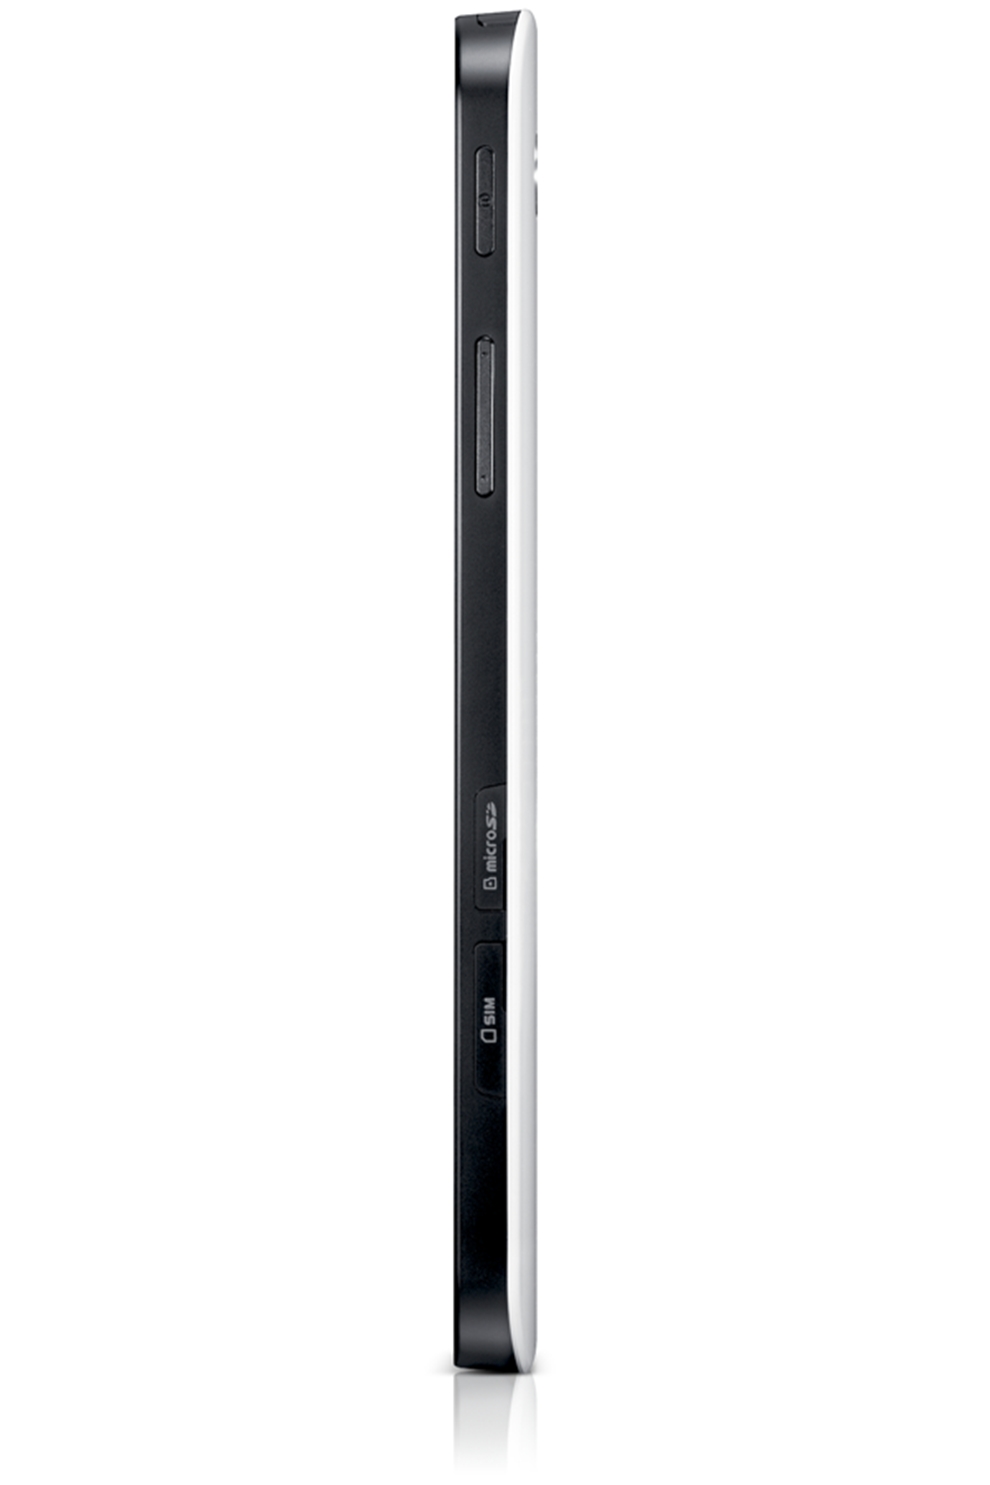 Samsung Galaxy Tab GT-P1000 16gb URGENT CELL  large image 1